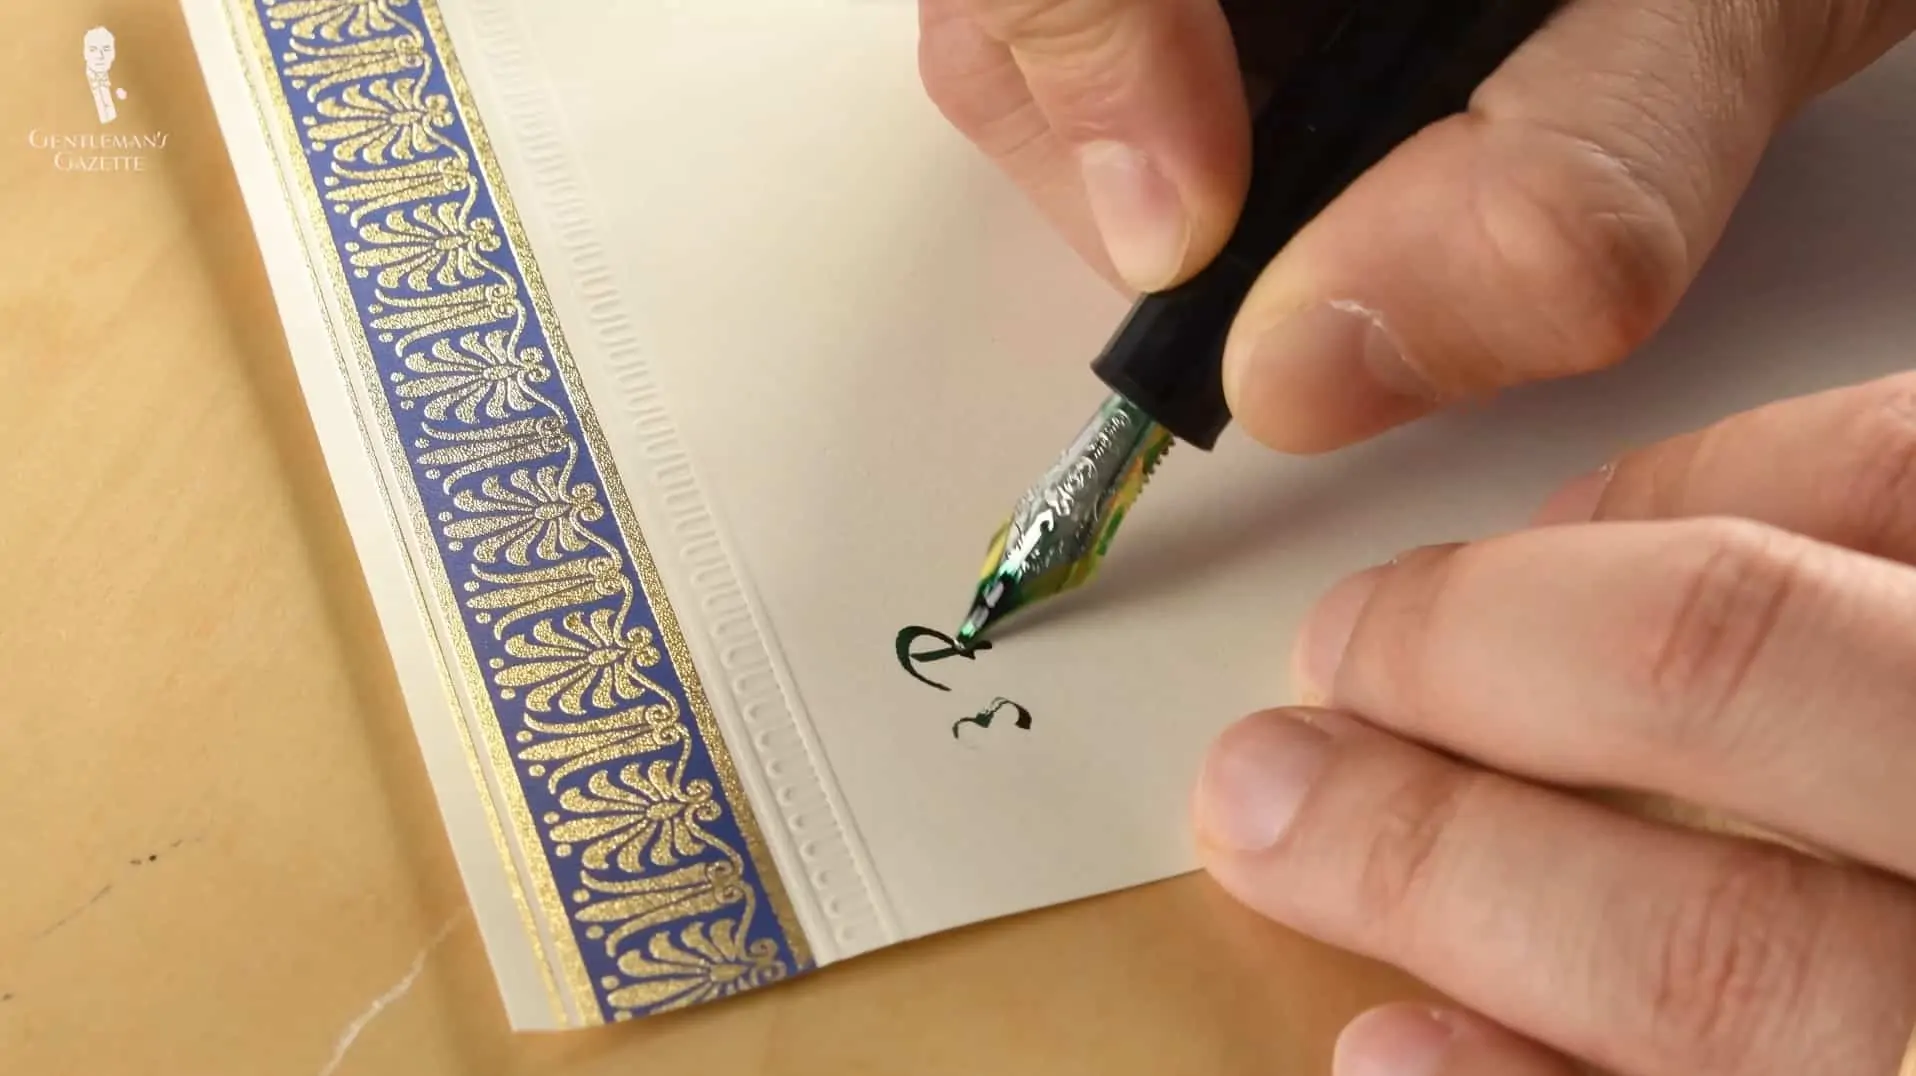 Raphael writing using a fountain pen